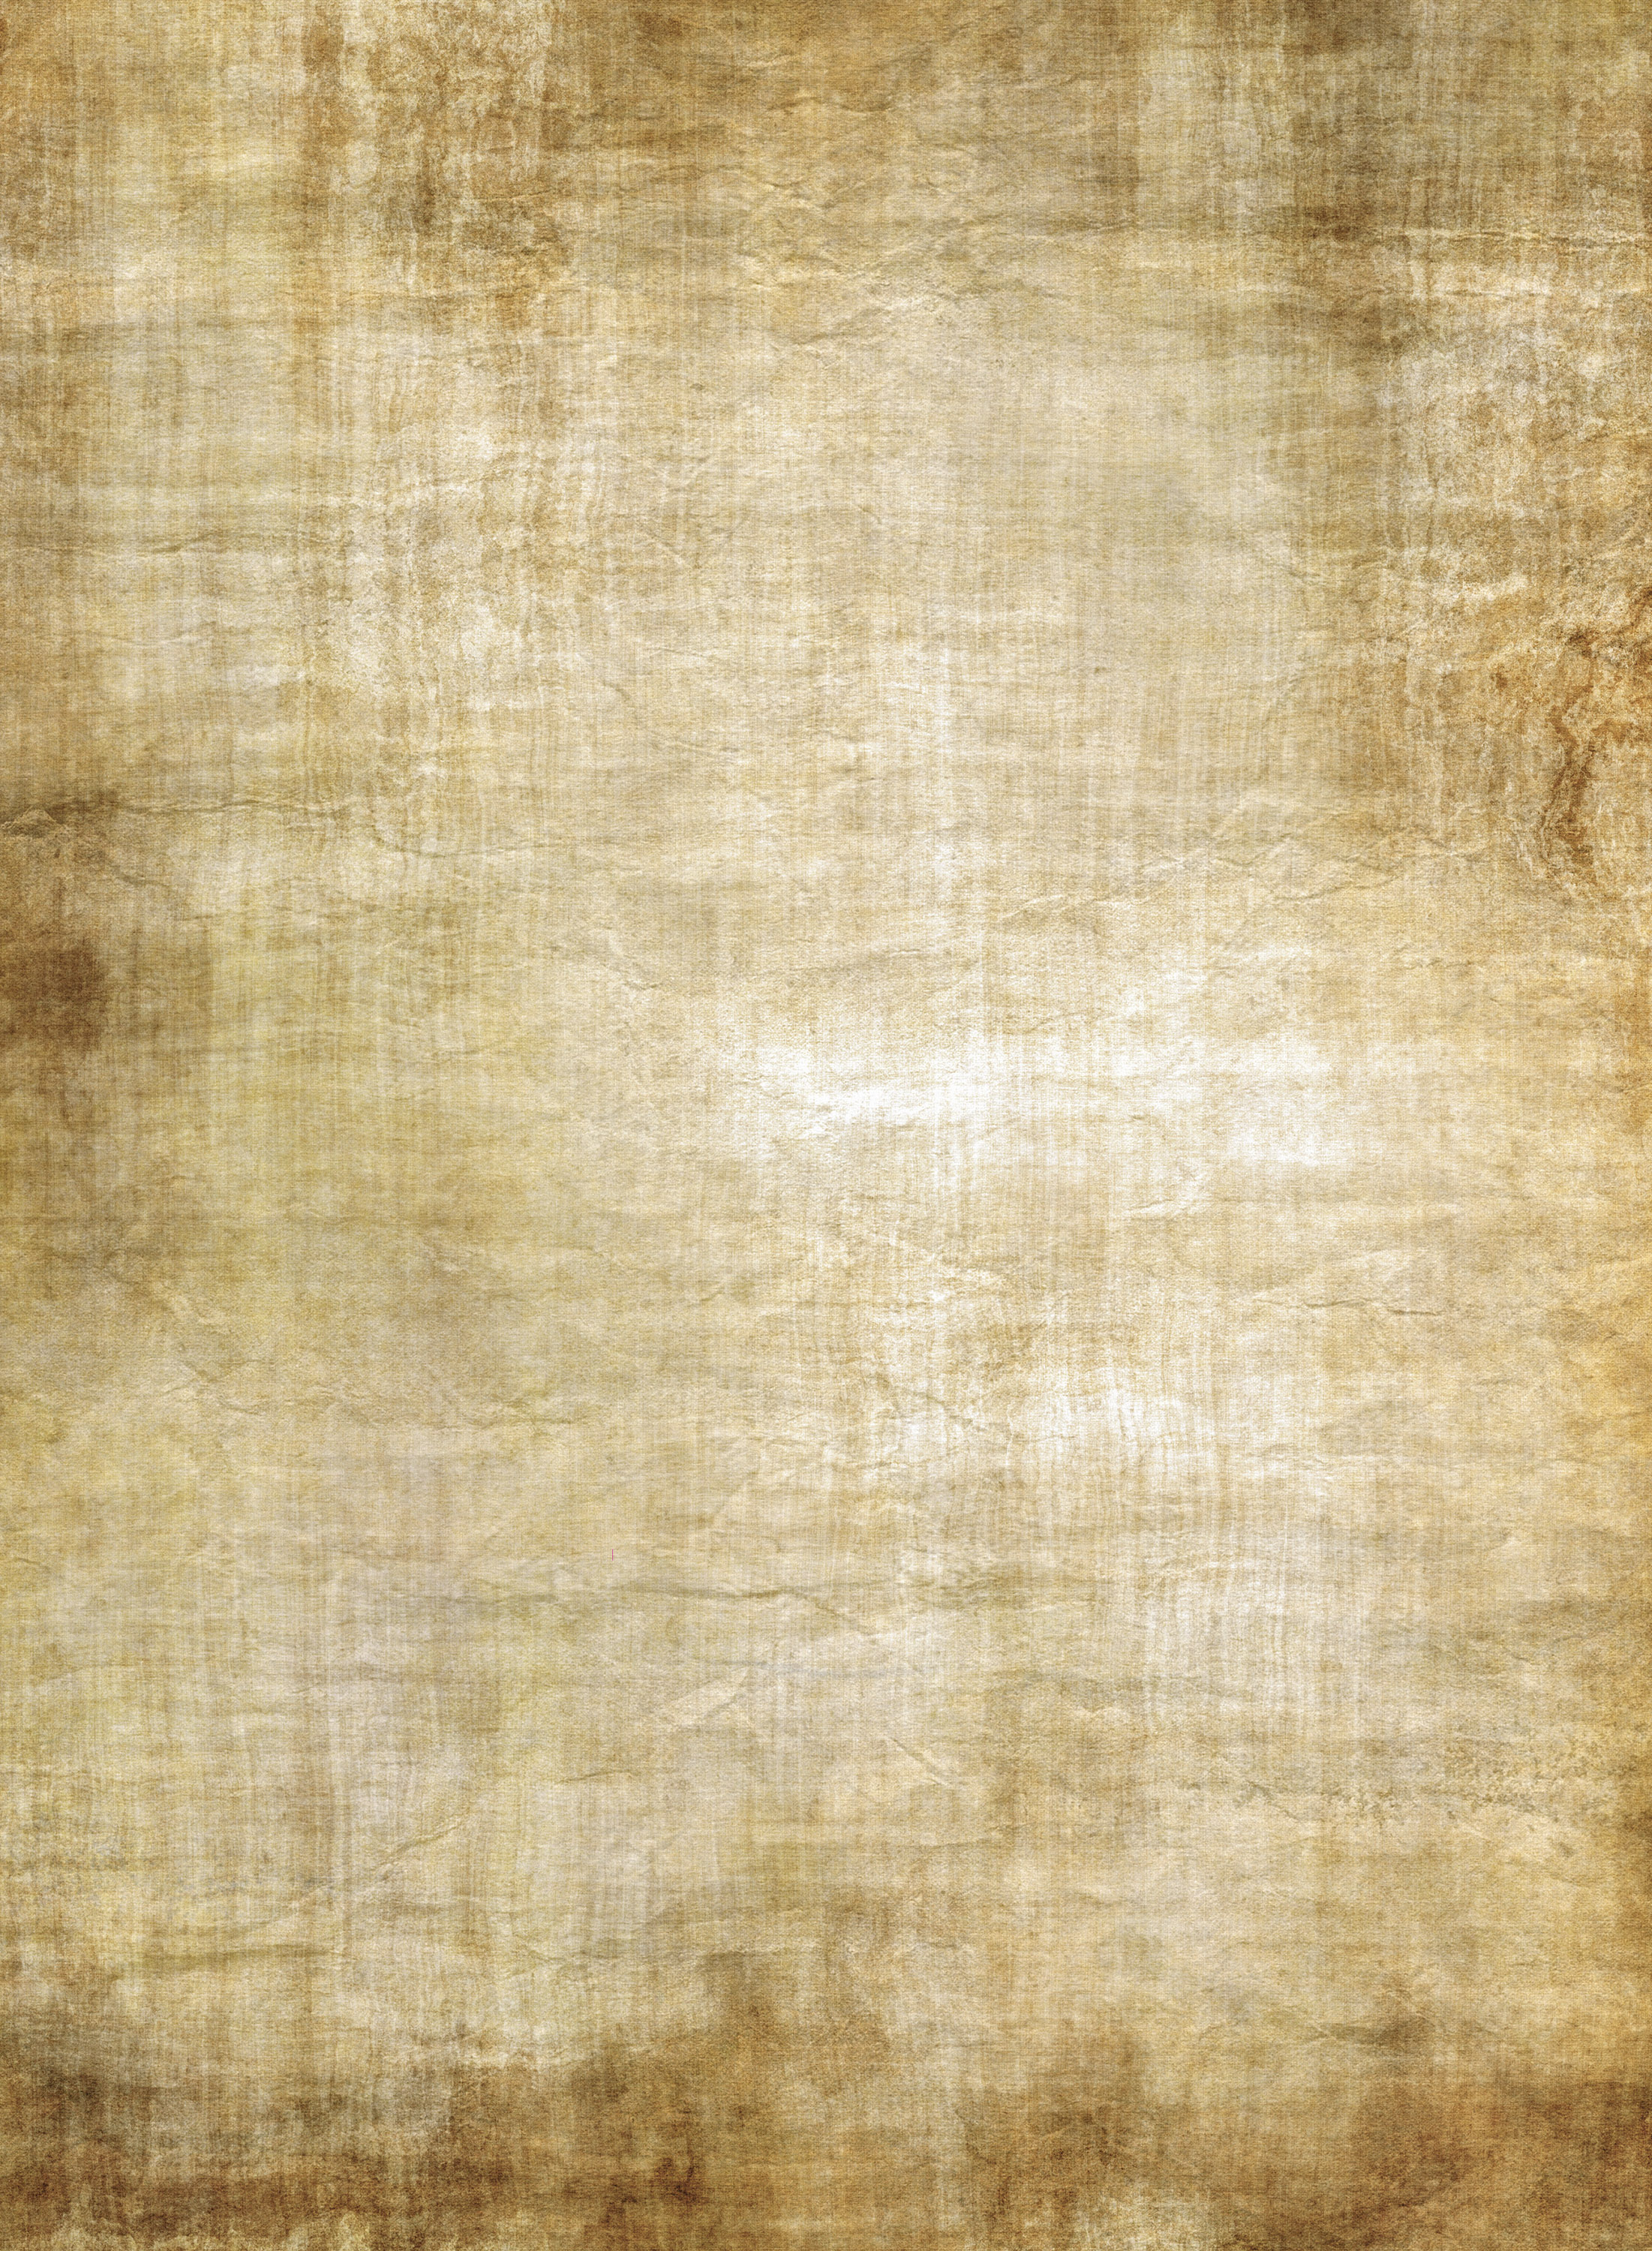 Paper Texture, K/3424909100, Wallpaper Album - High Resolution Parchment Paper Texture - HD Wallpaper 